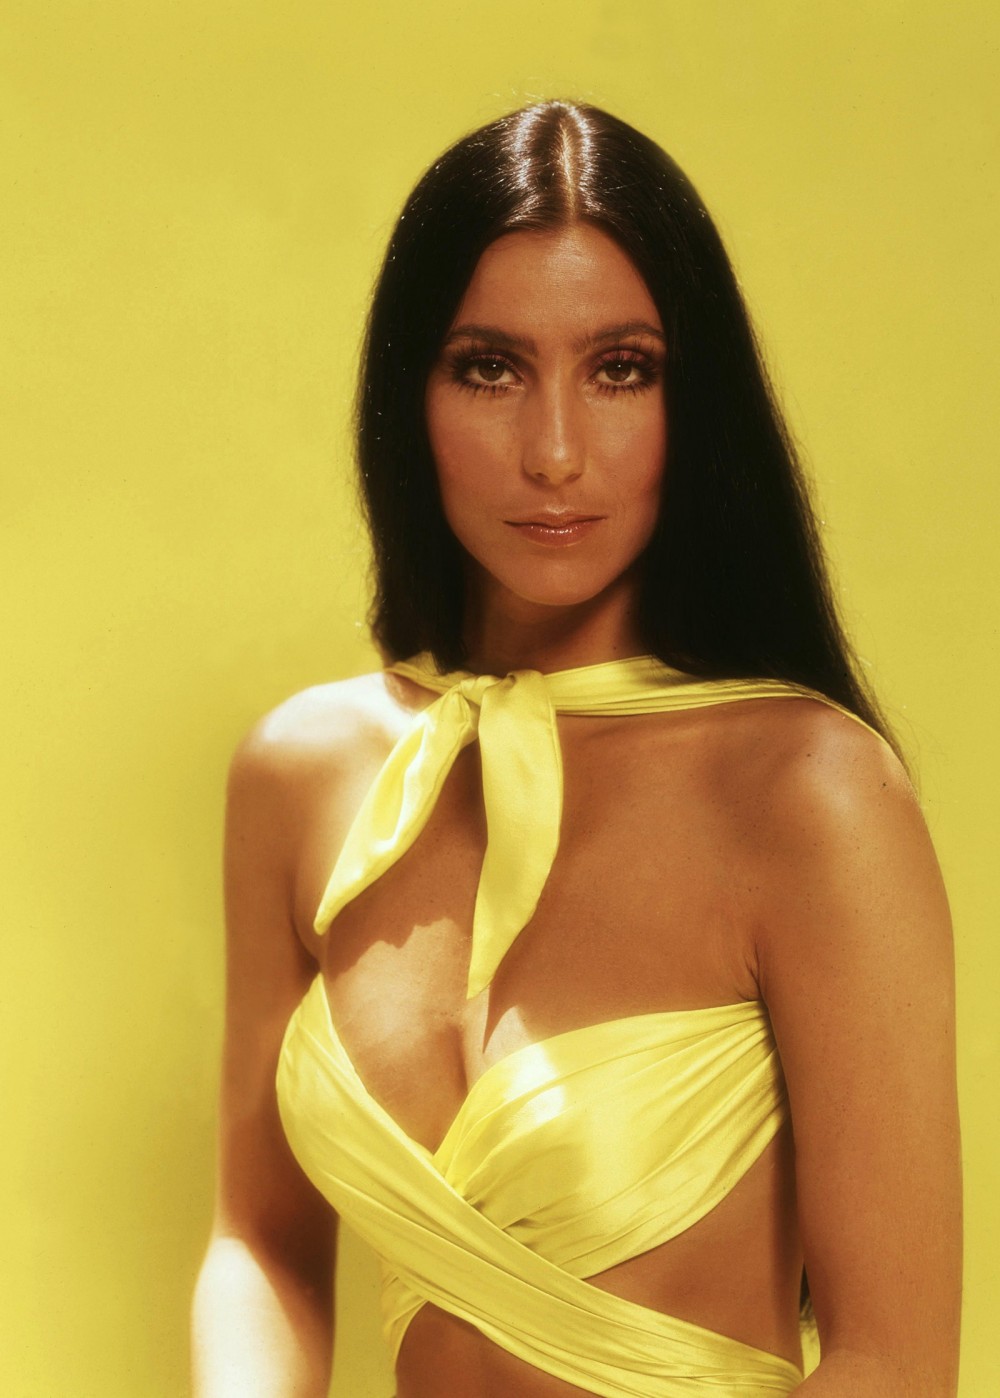 Zendayas Knockout Oscars Look Was a Playful Nod to Cher